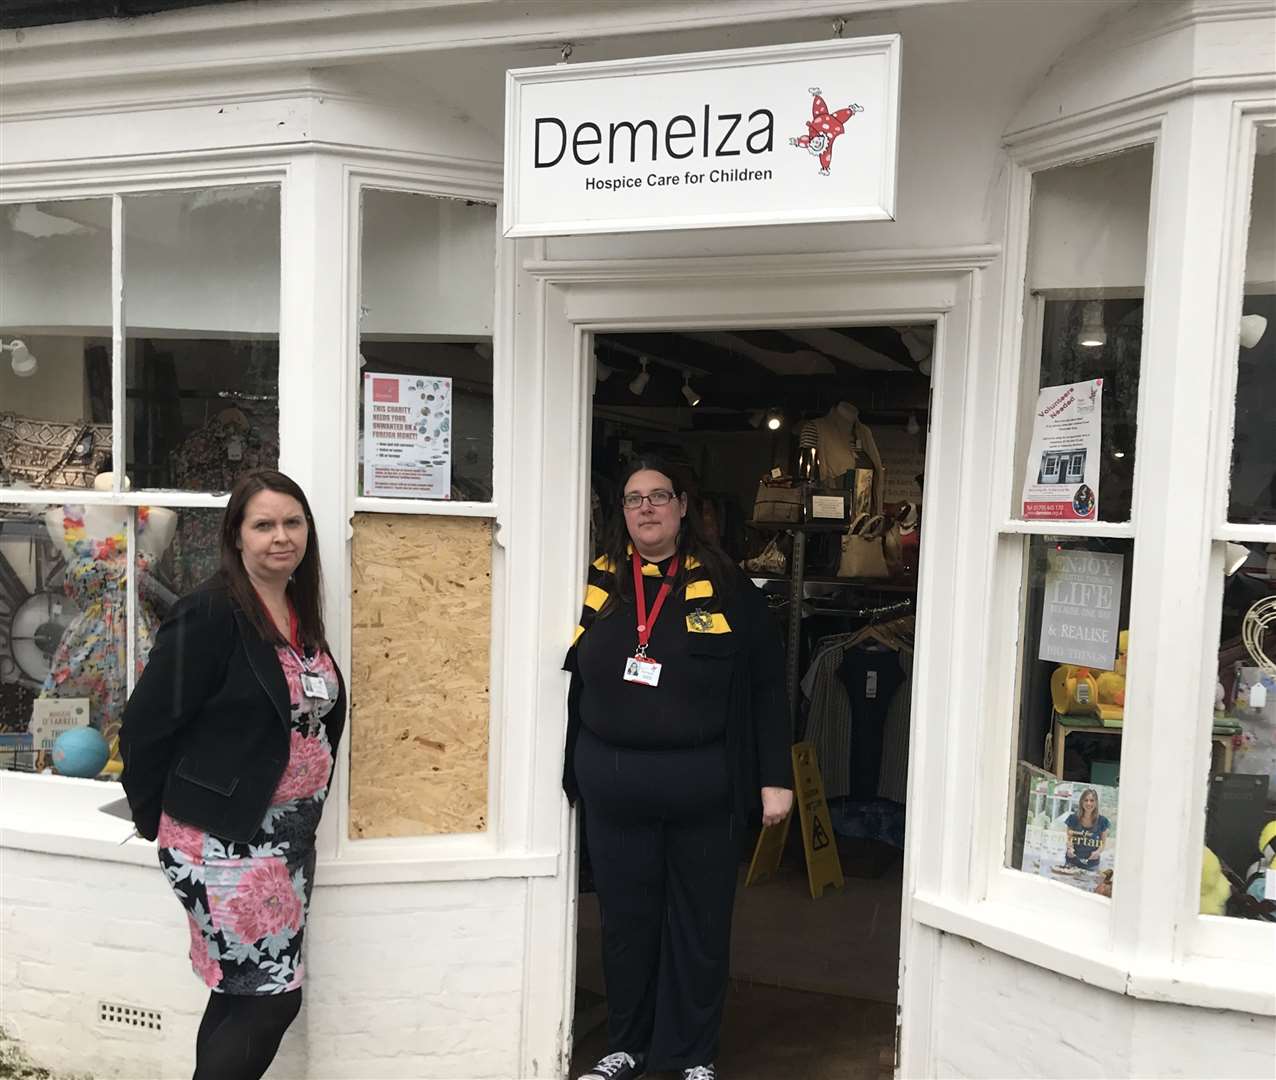 Demelza Hospice shop in Tenterden High Street, where there was a break-in